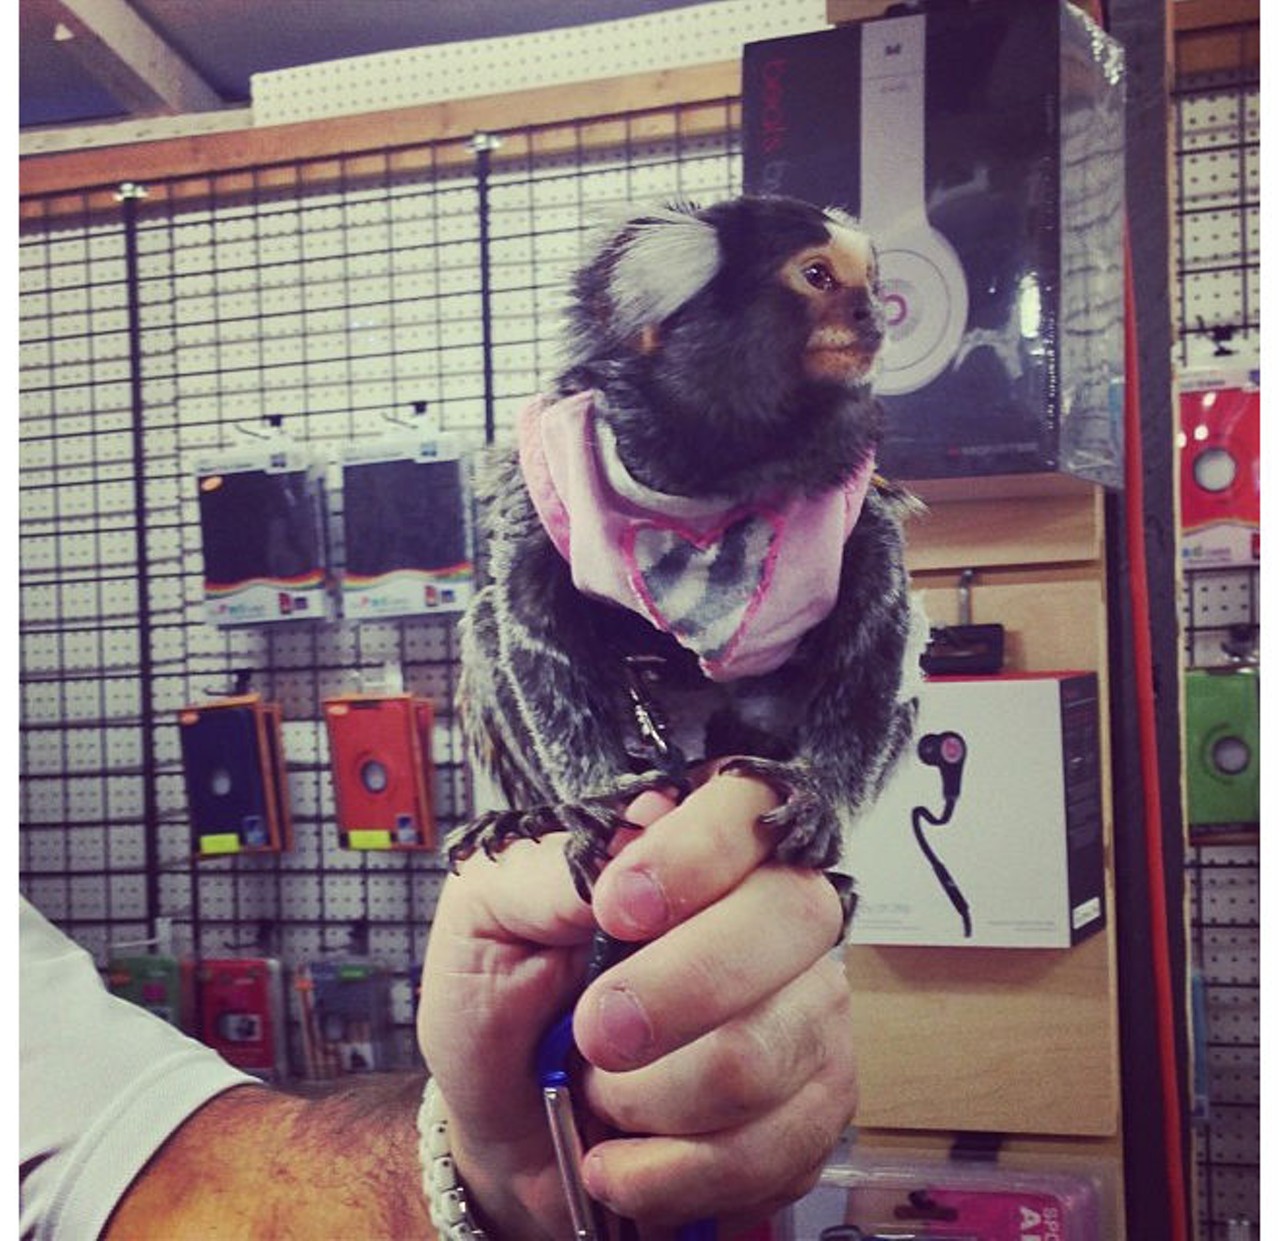 A marmoset!Instagram: crystalayla